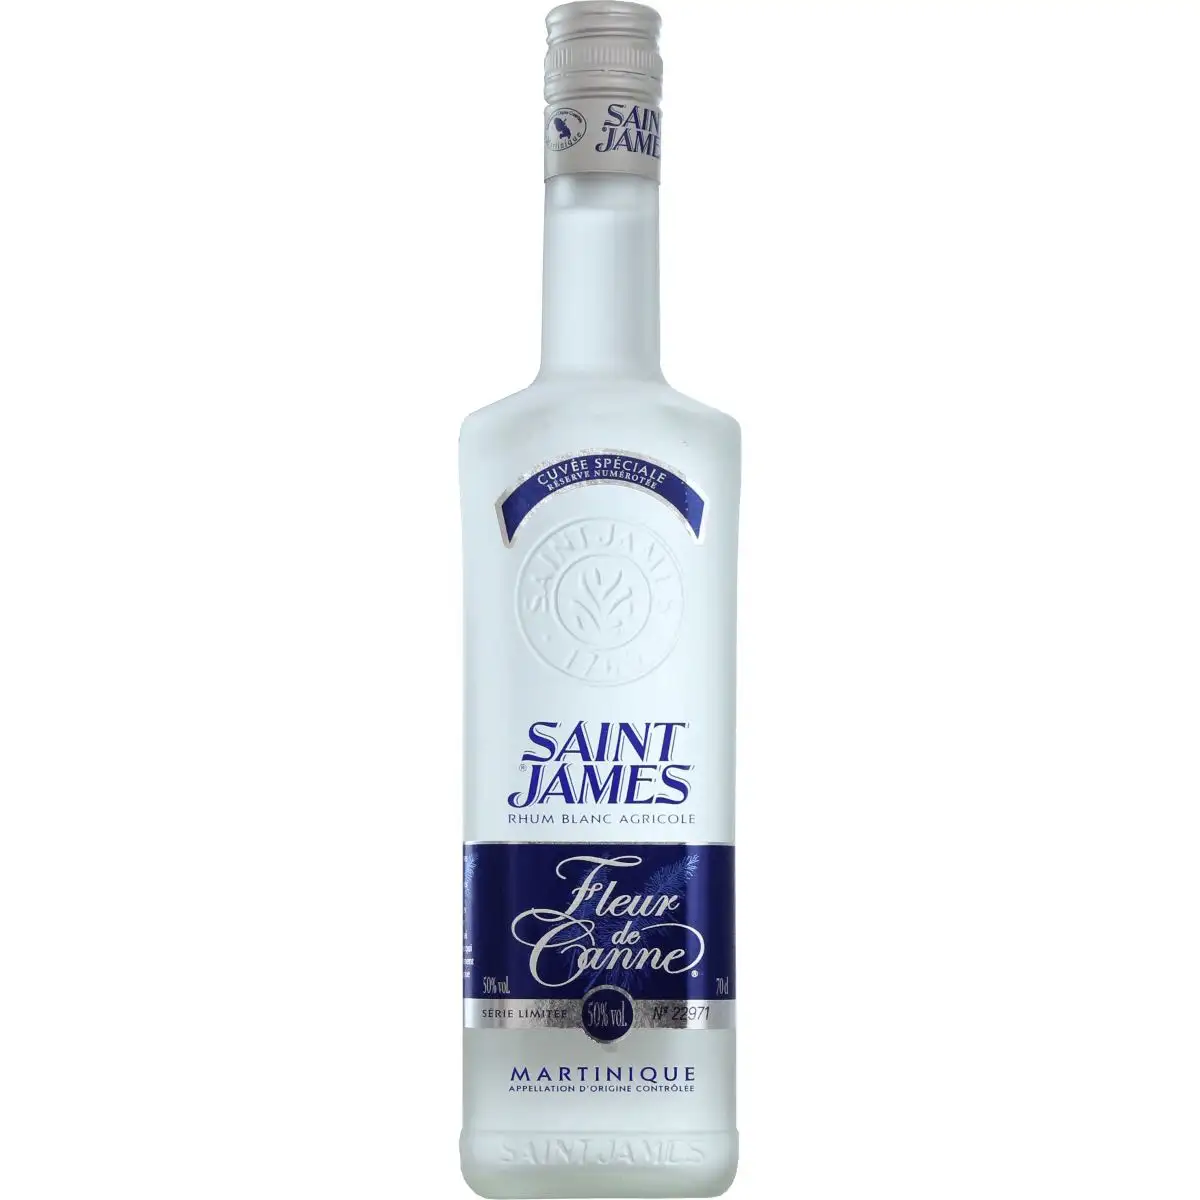 Saint James Blanc Rum